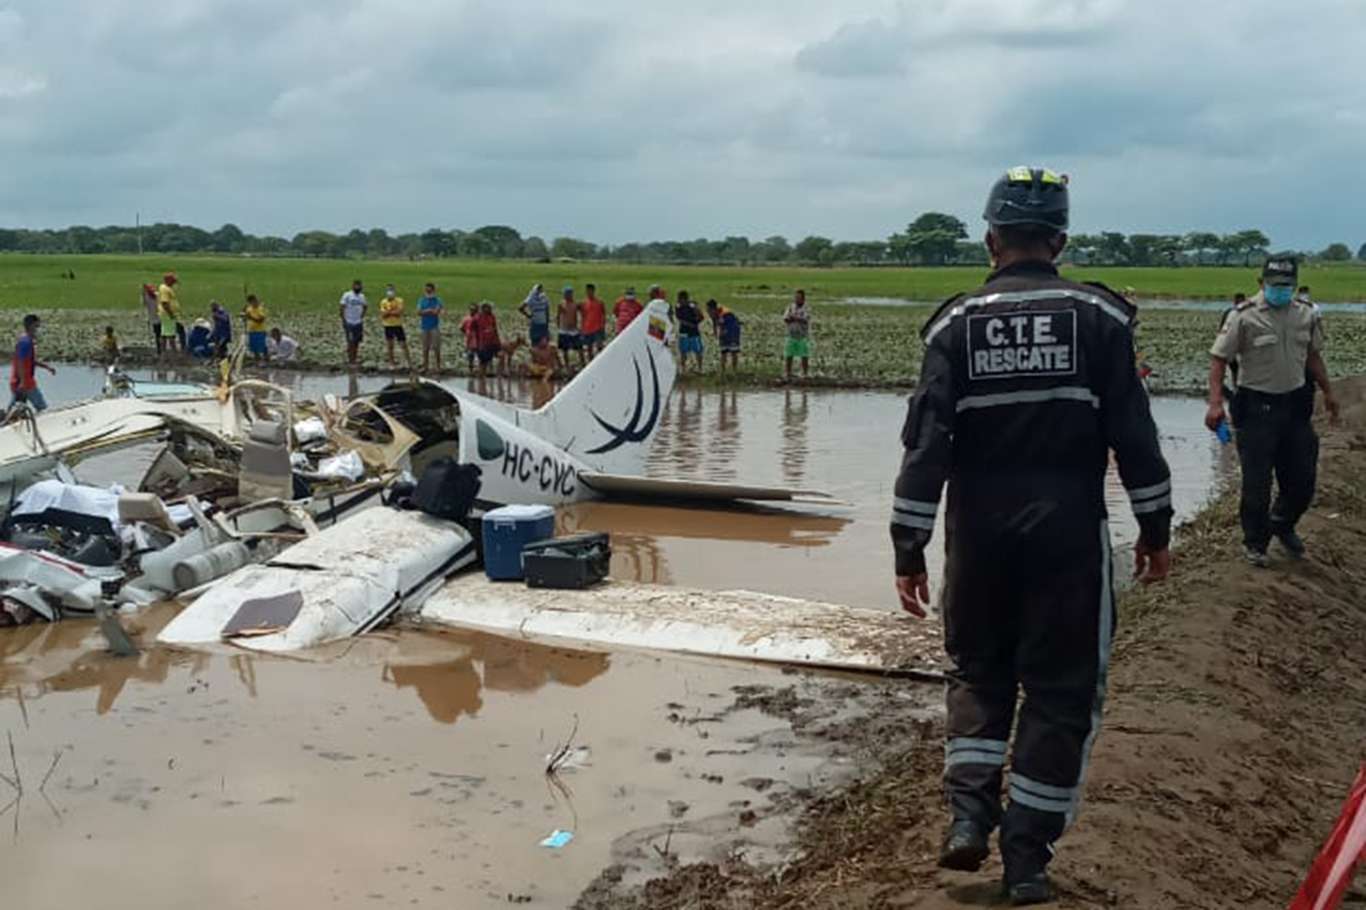 Six killed in Ecuador plane crash